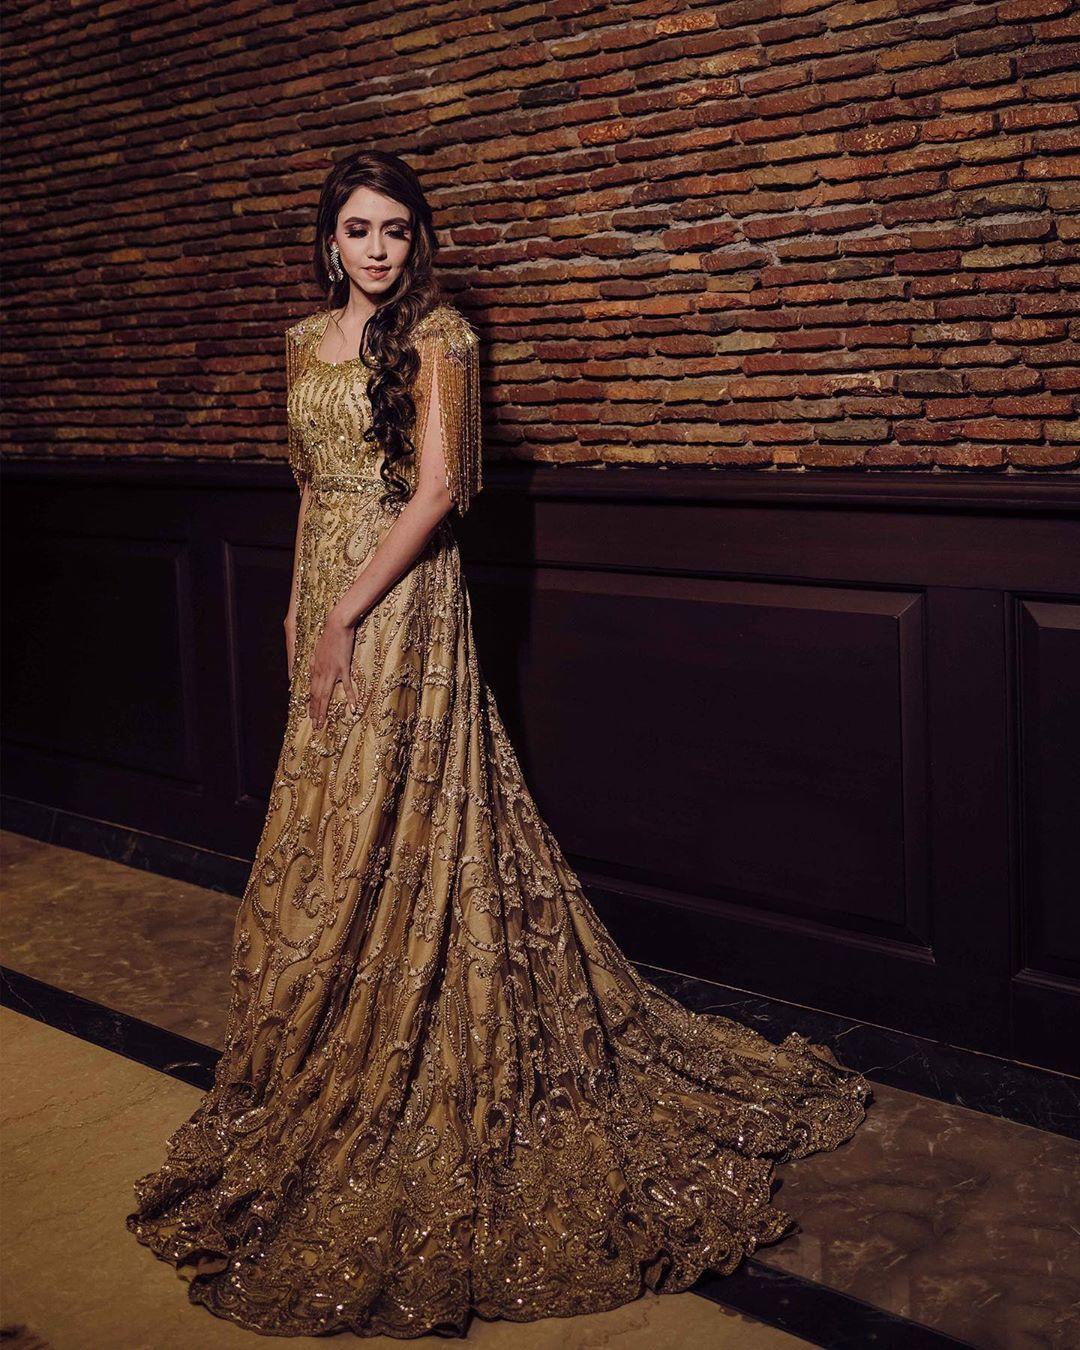 Indian Wedding Reception Outfits | Elegant Engagement Dress